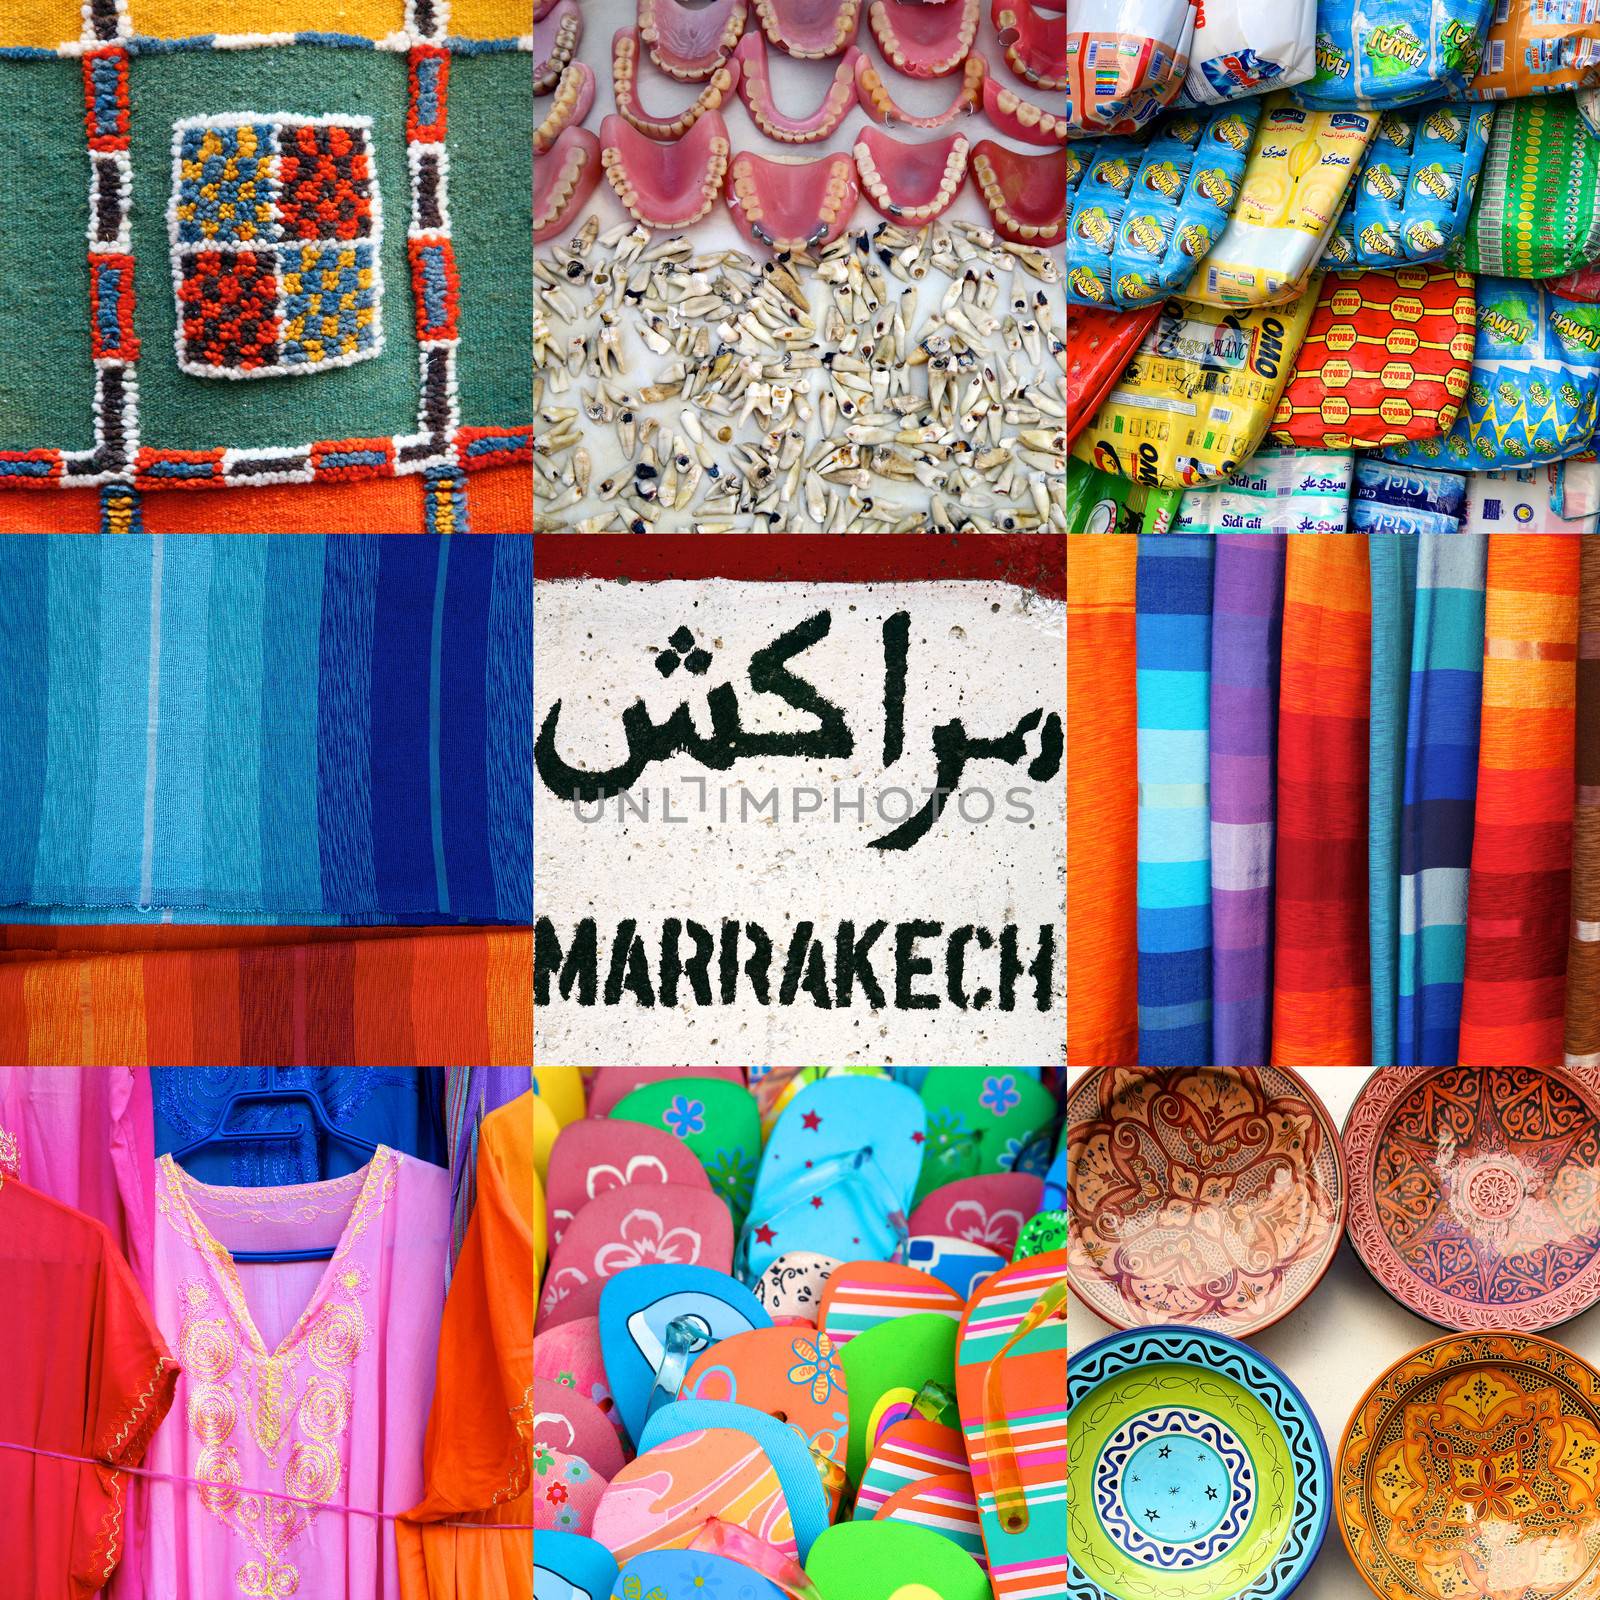 Marrakesh Market by watchtheworld